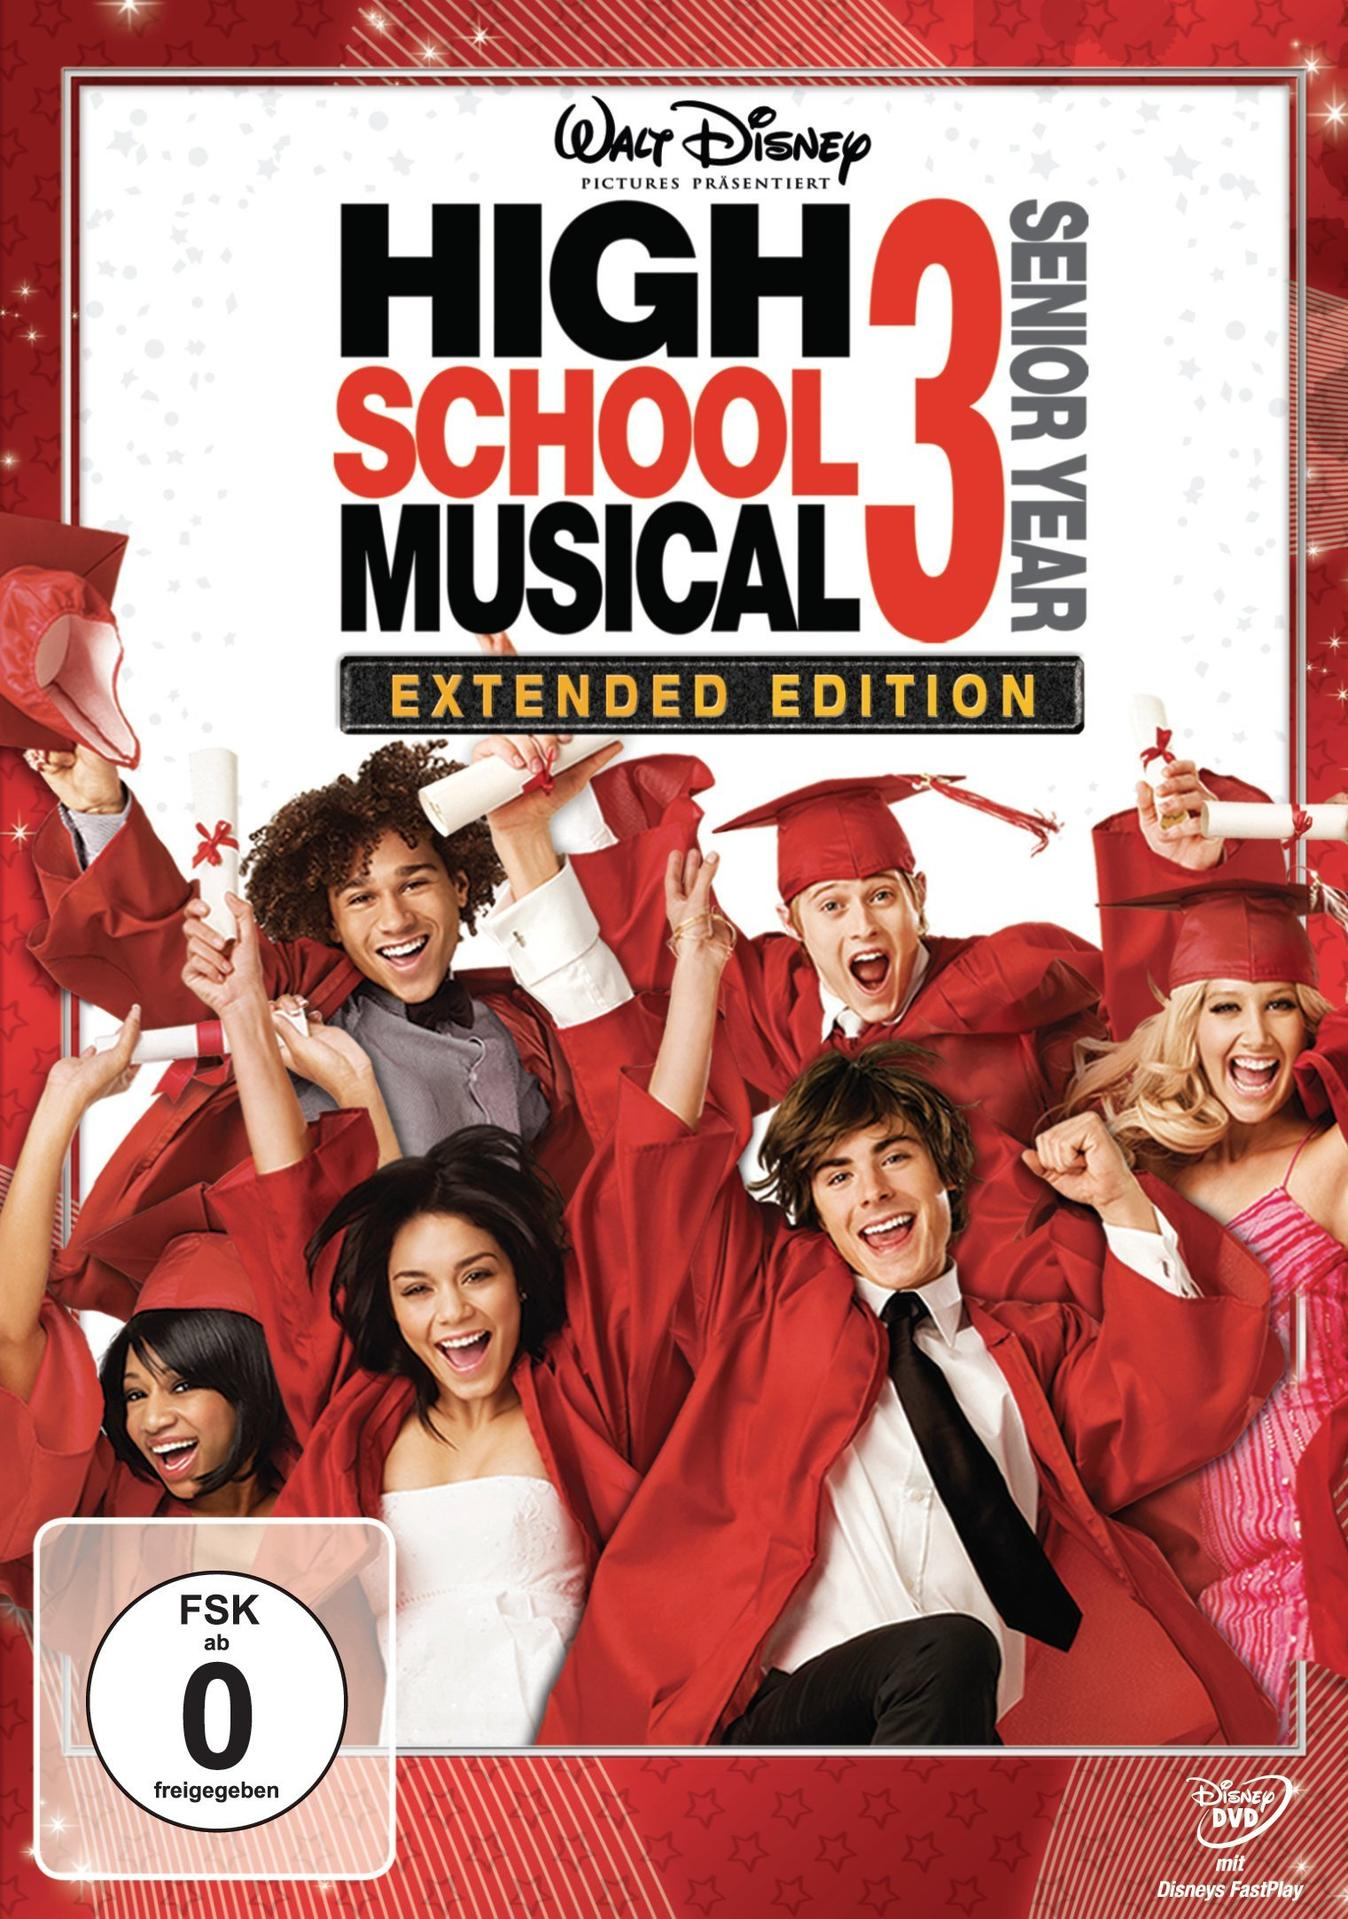 - High DVD School Senior 3 Musical Year